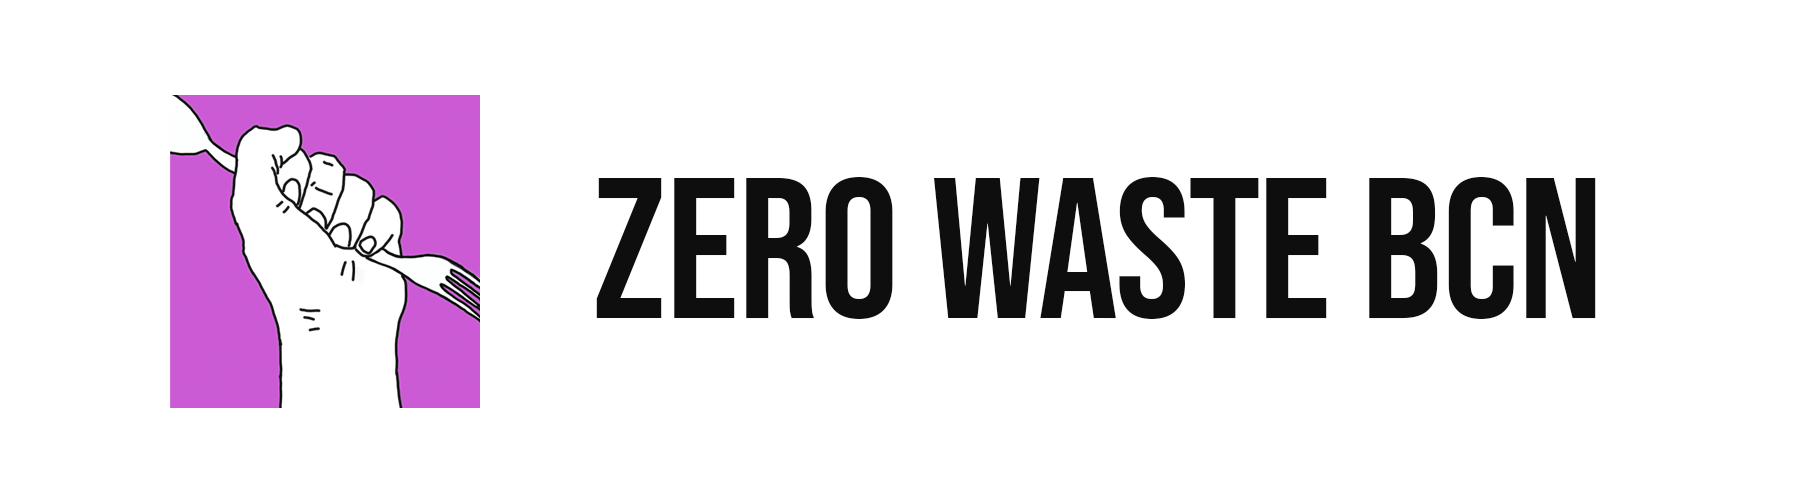 Zero Waste BCN